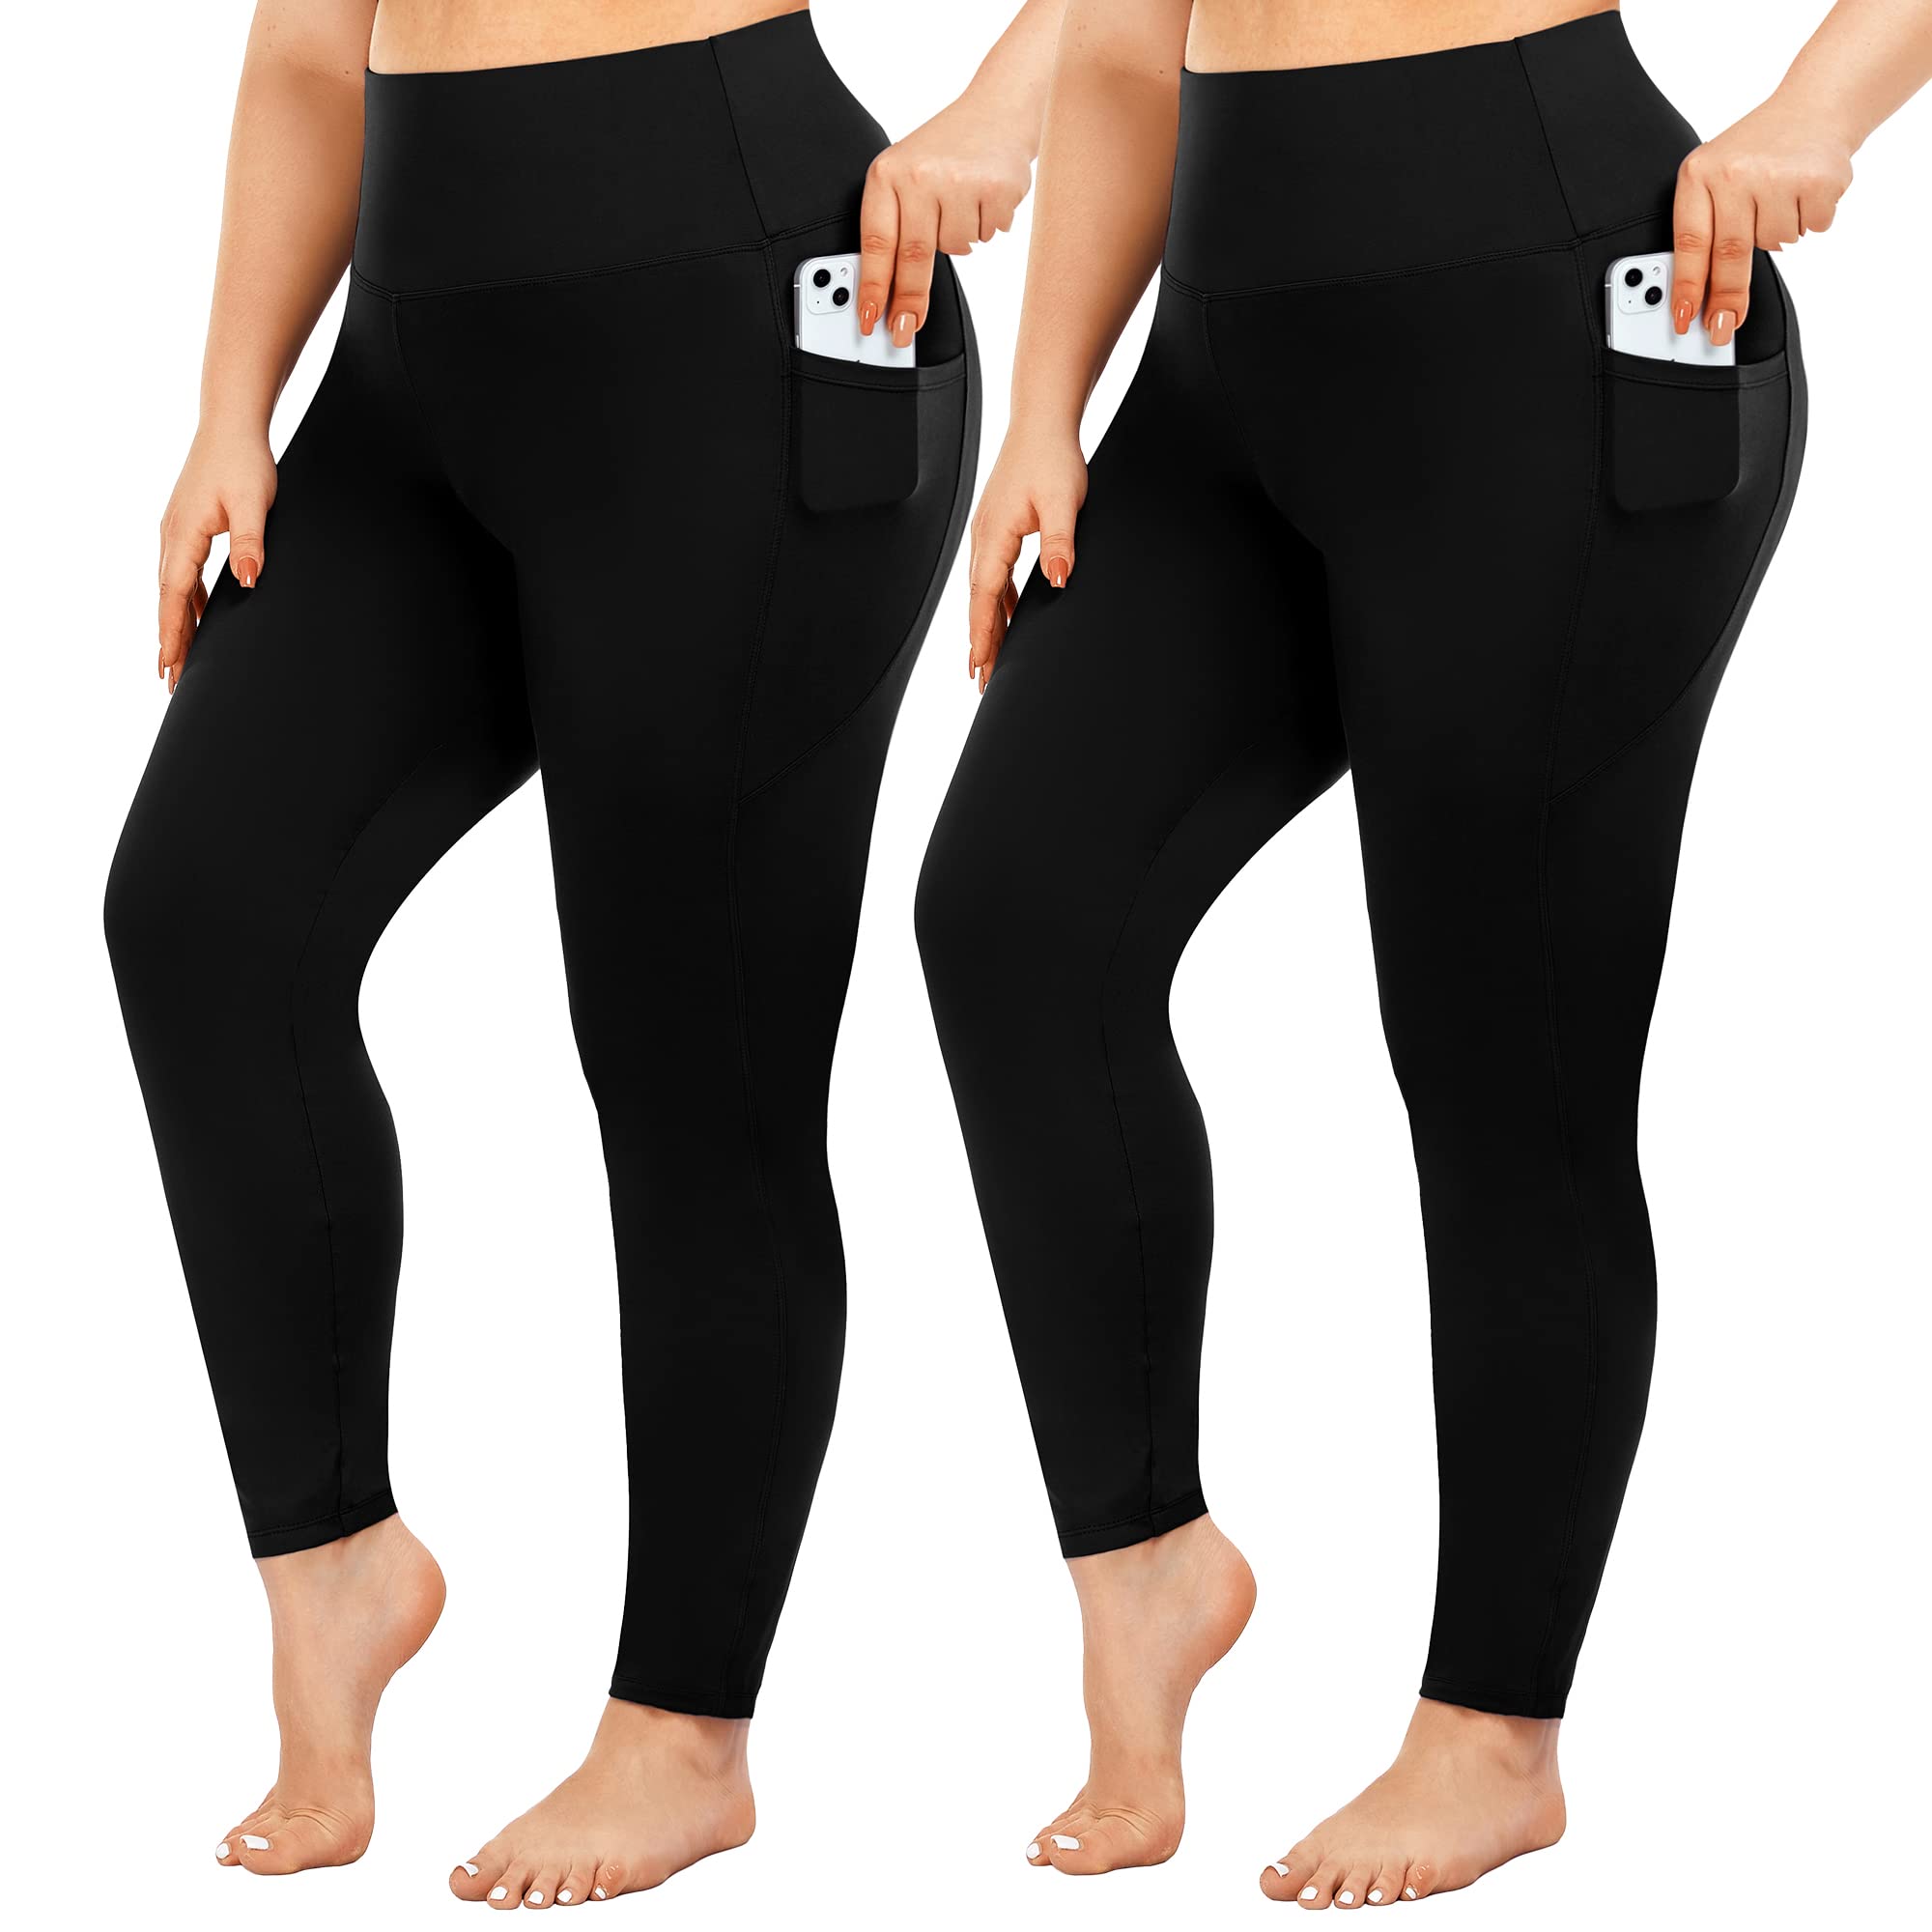 yeuG Women's Plus Size Leggings with Pocket-2 Pack High Waist Tummy Control  Yoga Pants Spandex Workout Running Black Leggings Black black XX-Large